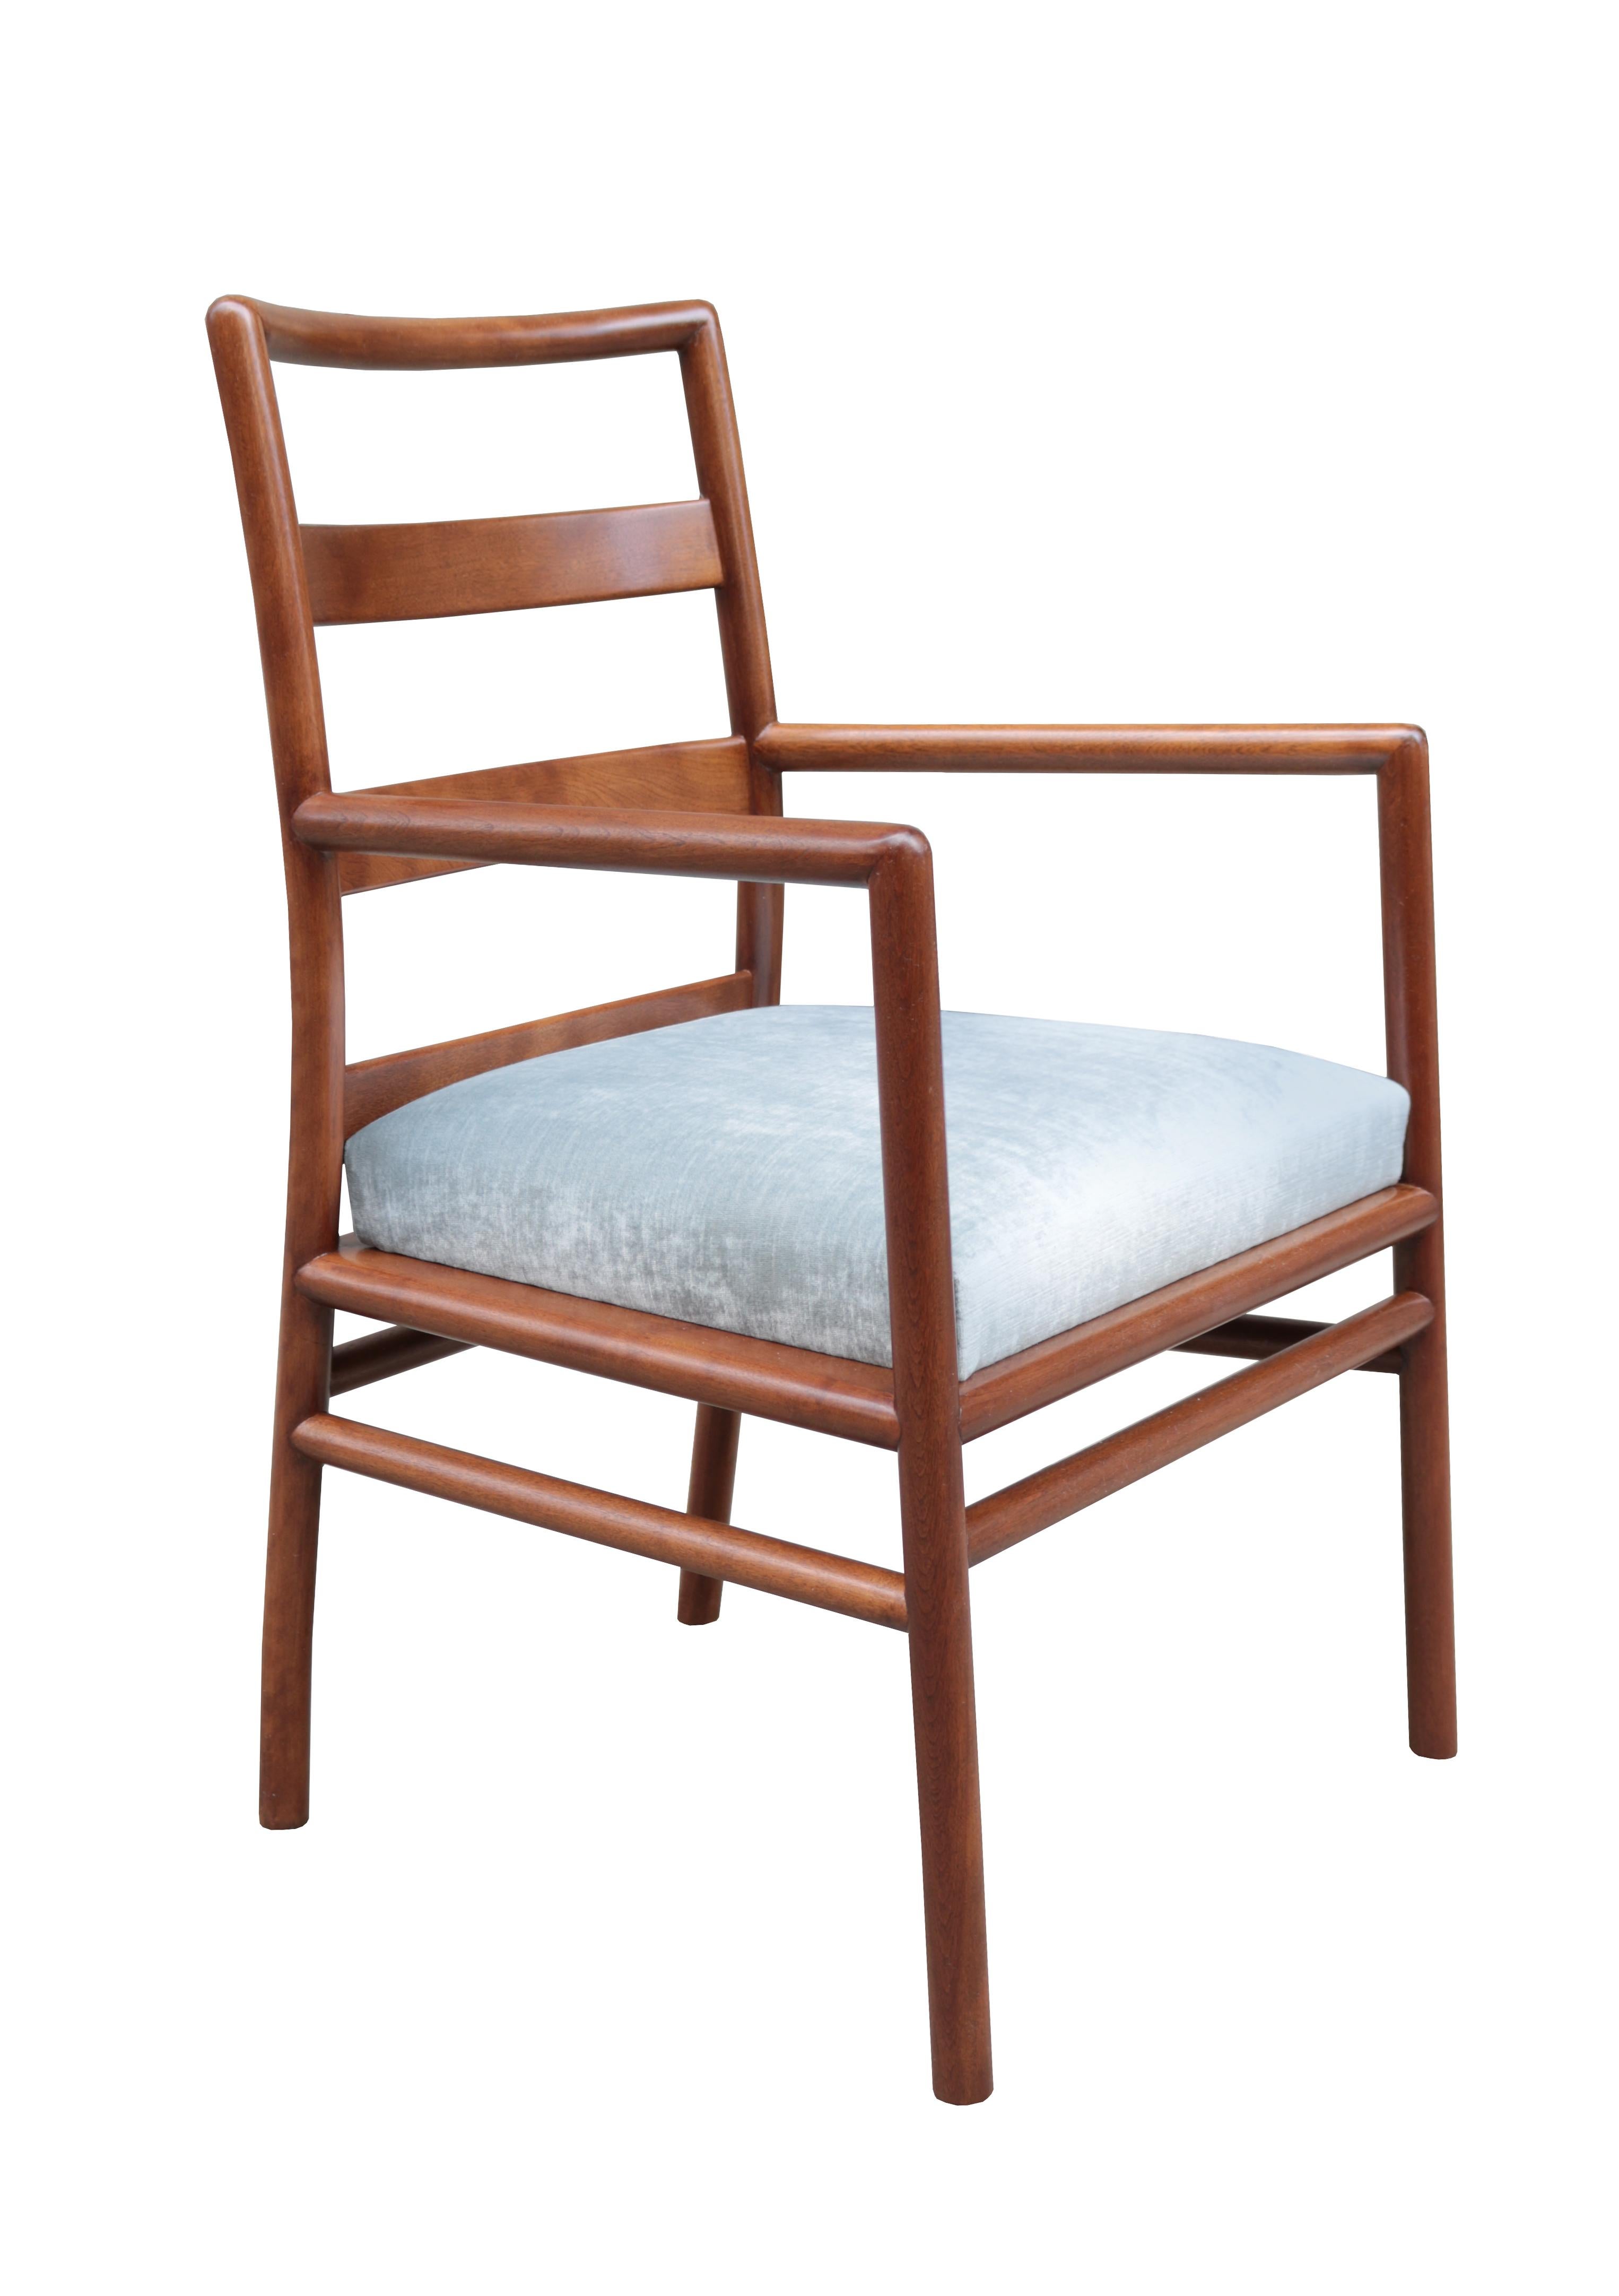 A pair of Widdicomb armchairs designed by T.H. Robsjohn Gibbings.
Mahogany frames.